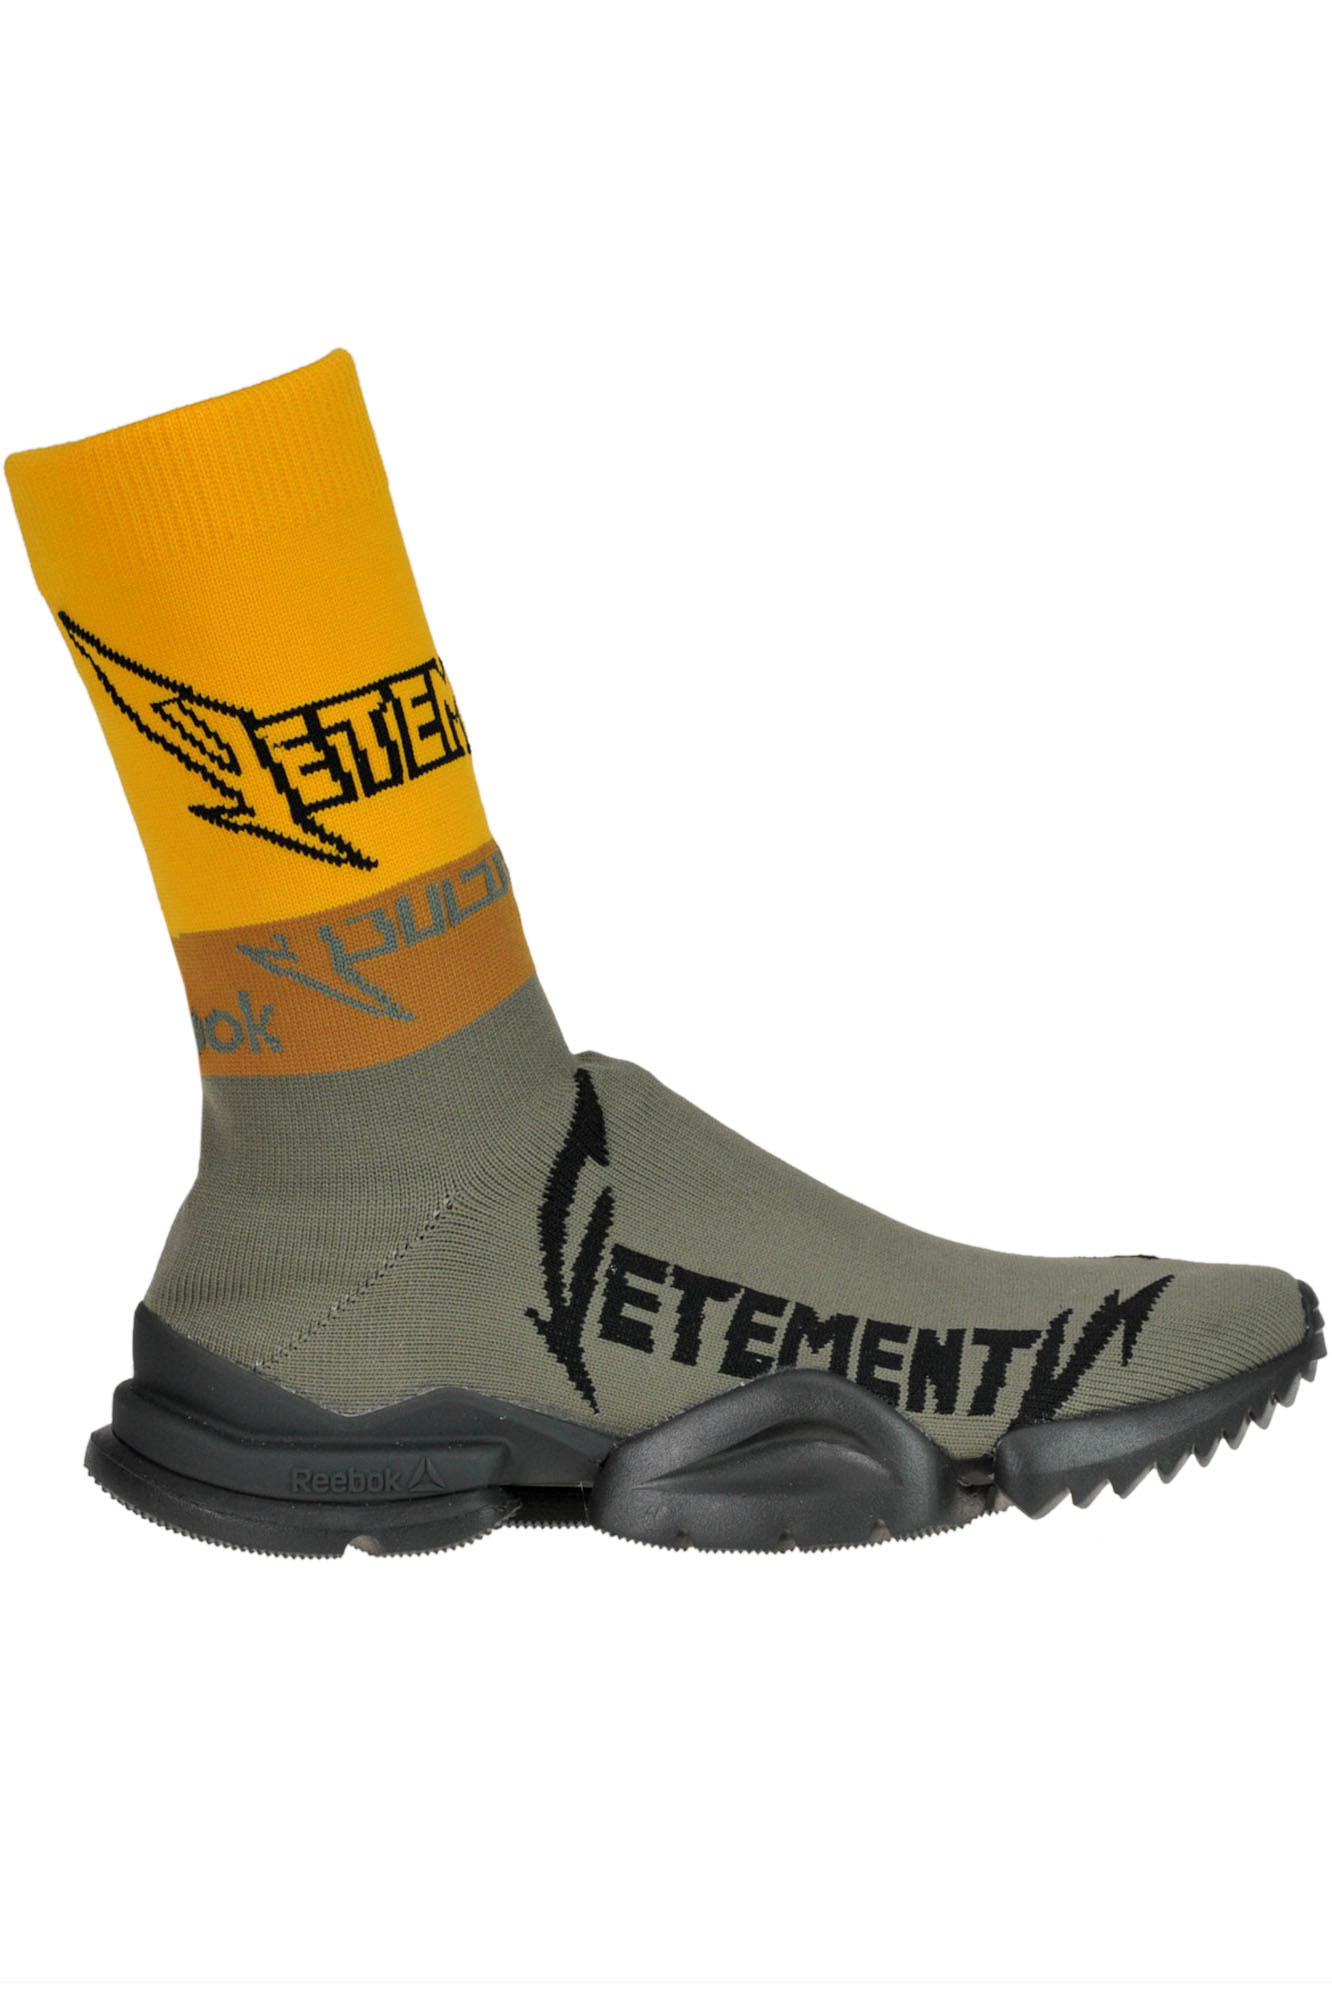 Vetements X Reebok Sock Sneakers In Multicoloured